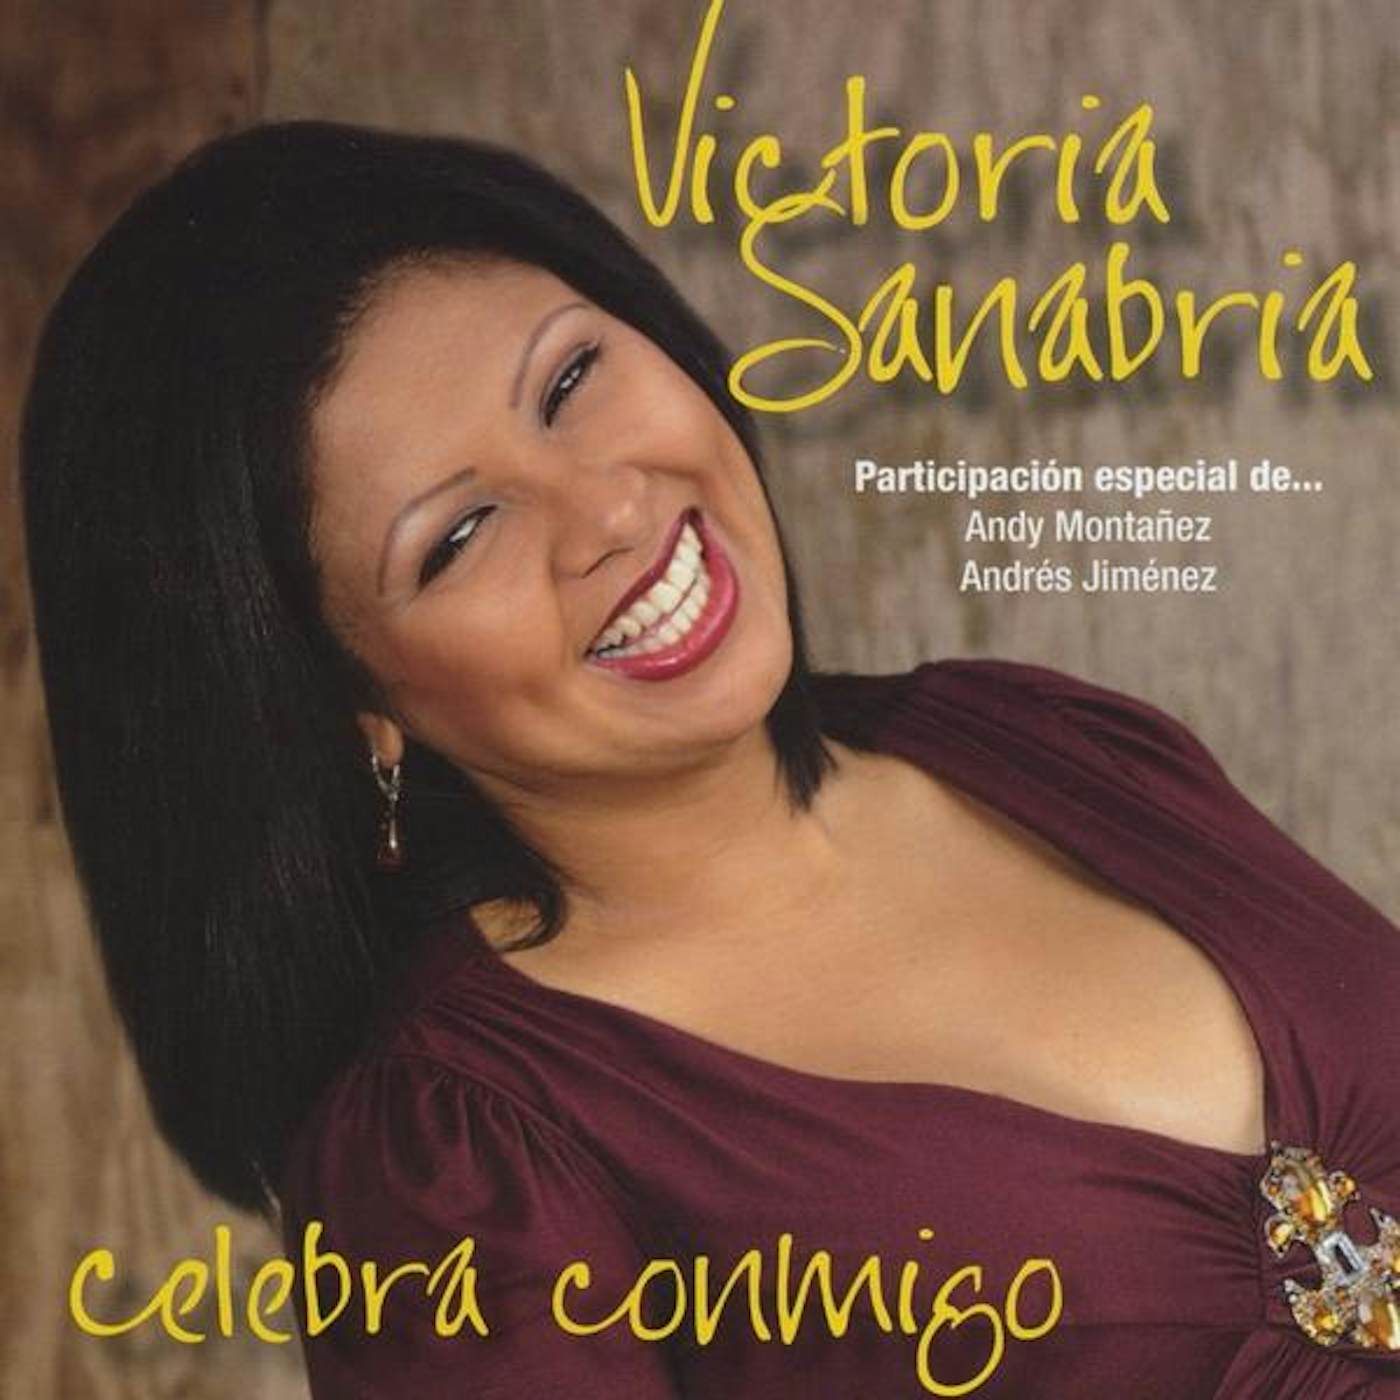 Victoria Sanabria CELEBRA CONMIGO CD